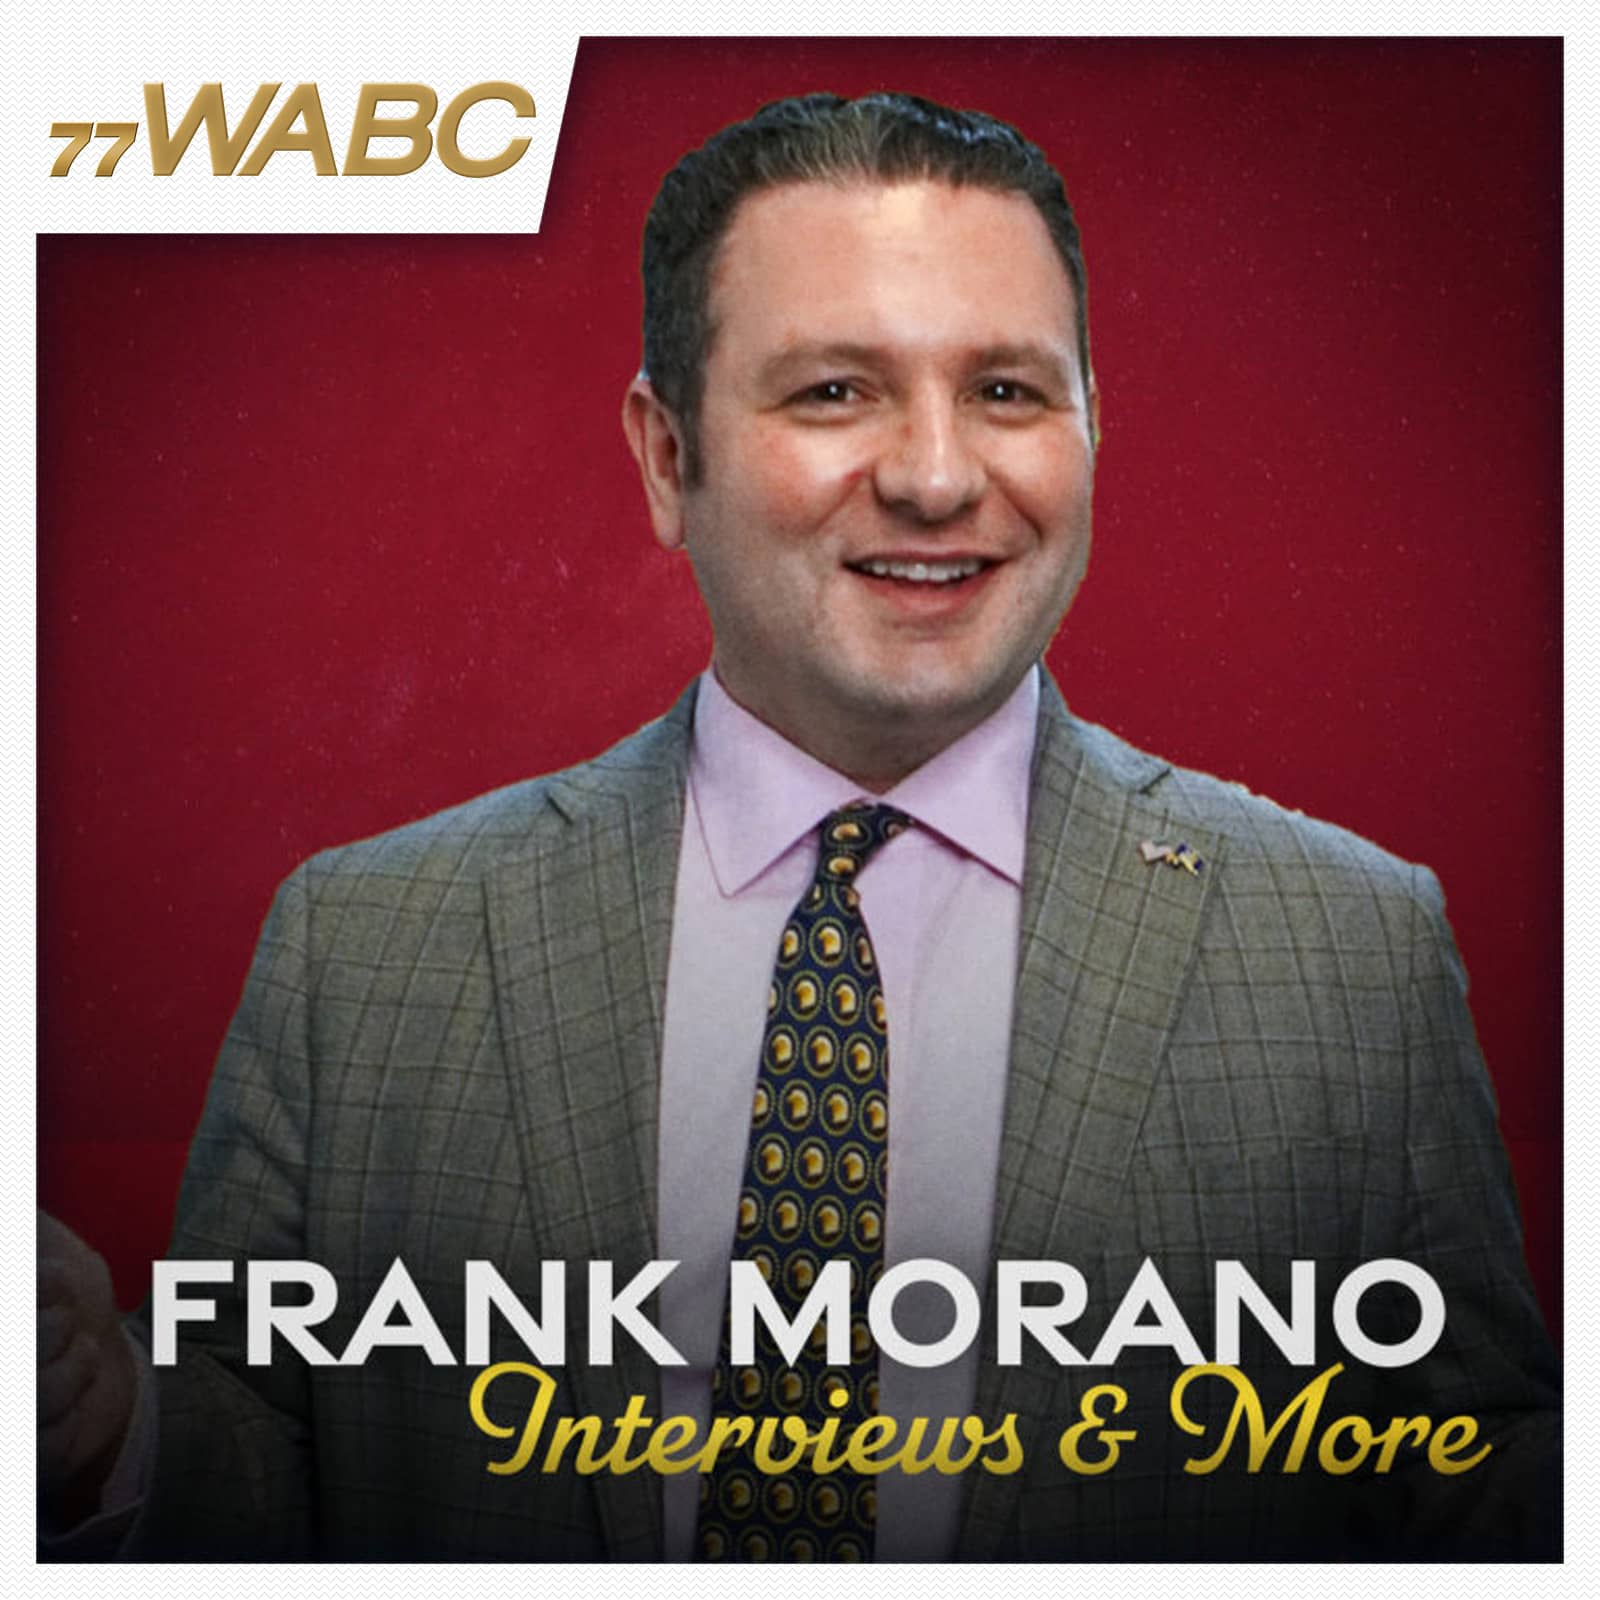 frank-morano-interviews-and-more-podcast-new-logo-29